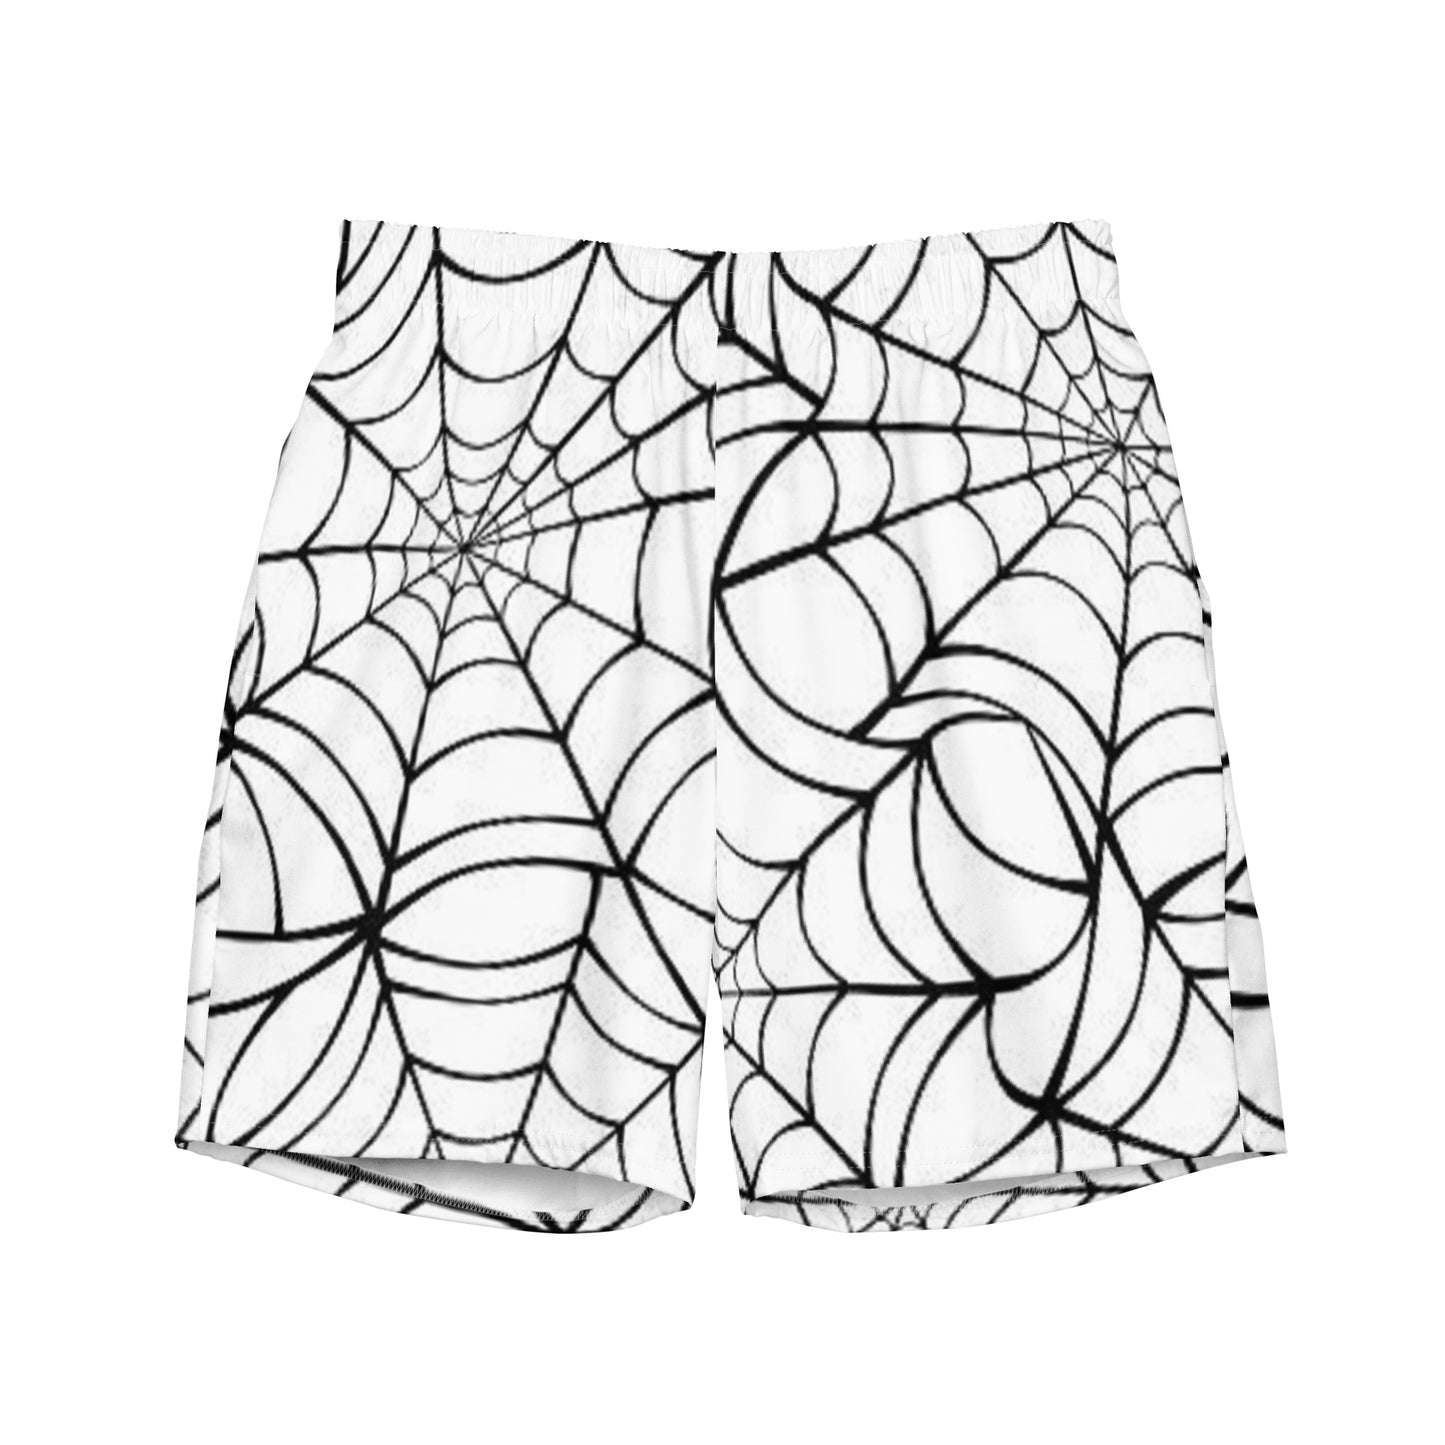 Spider Web swim trunks